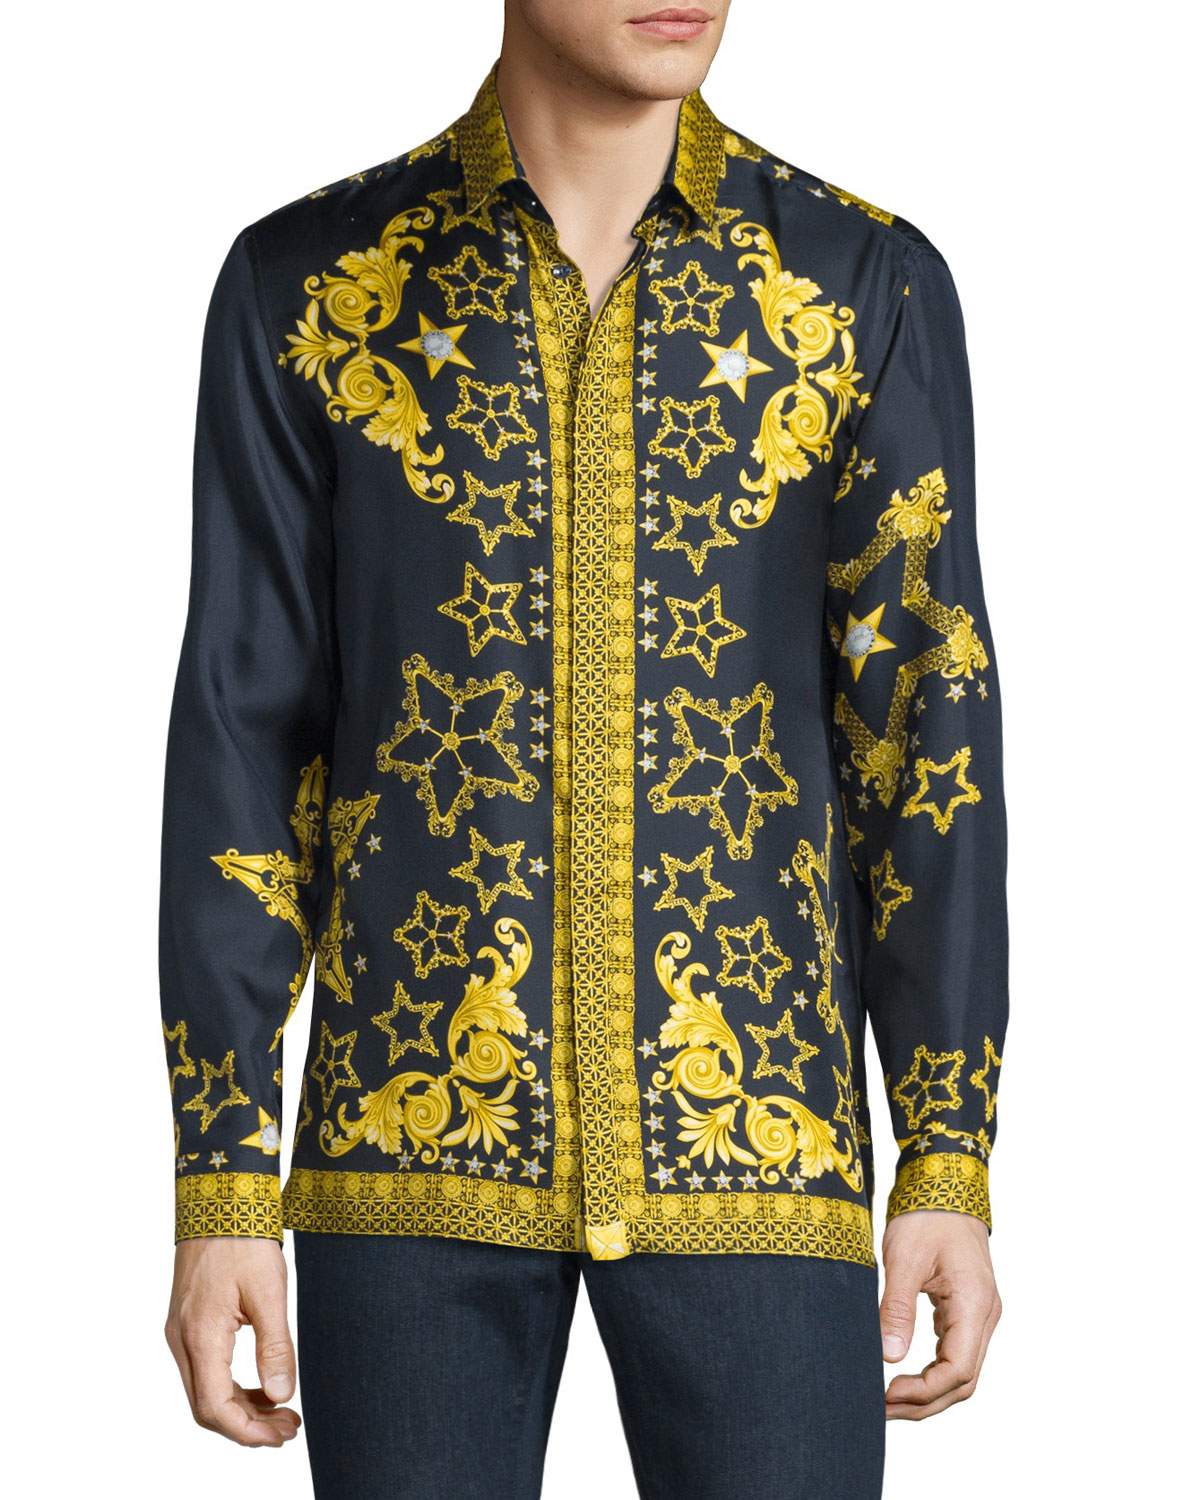 Lyst - Versace Baroque & Star Printed Long-sleeve Silk Shirt in Blue